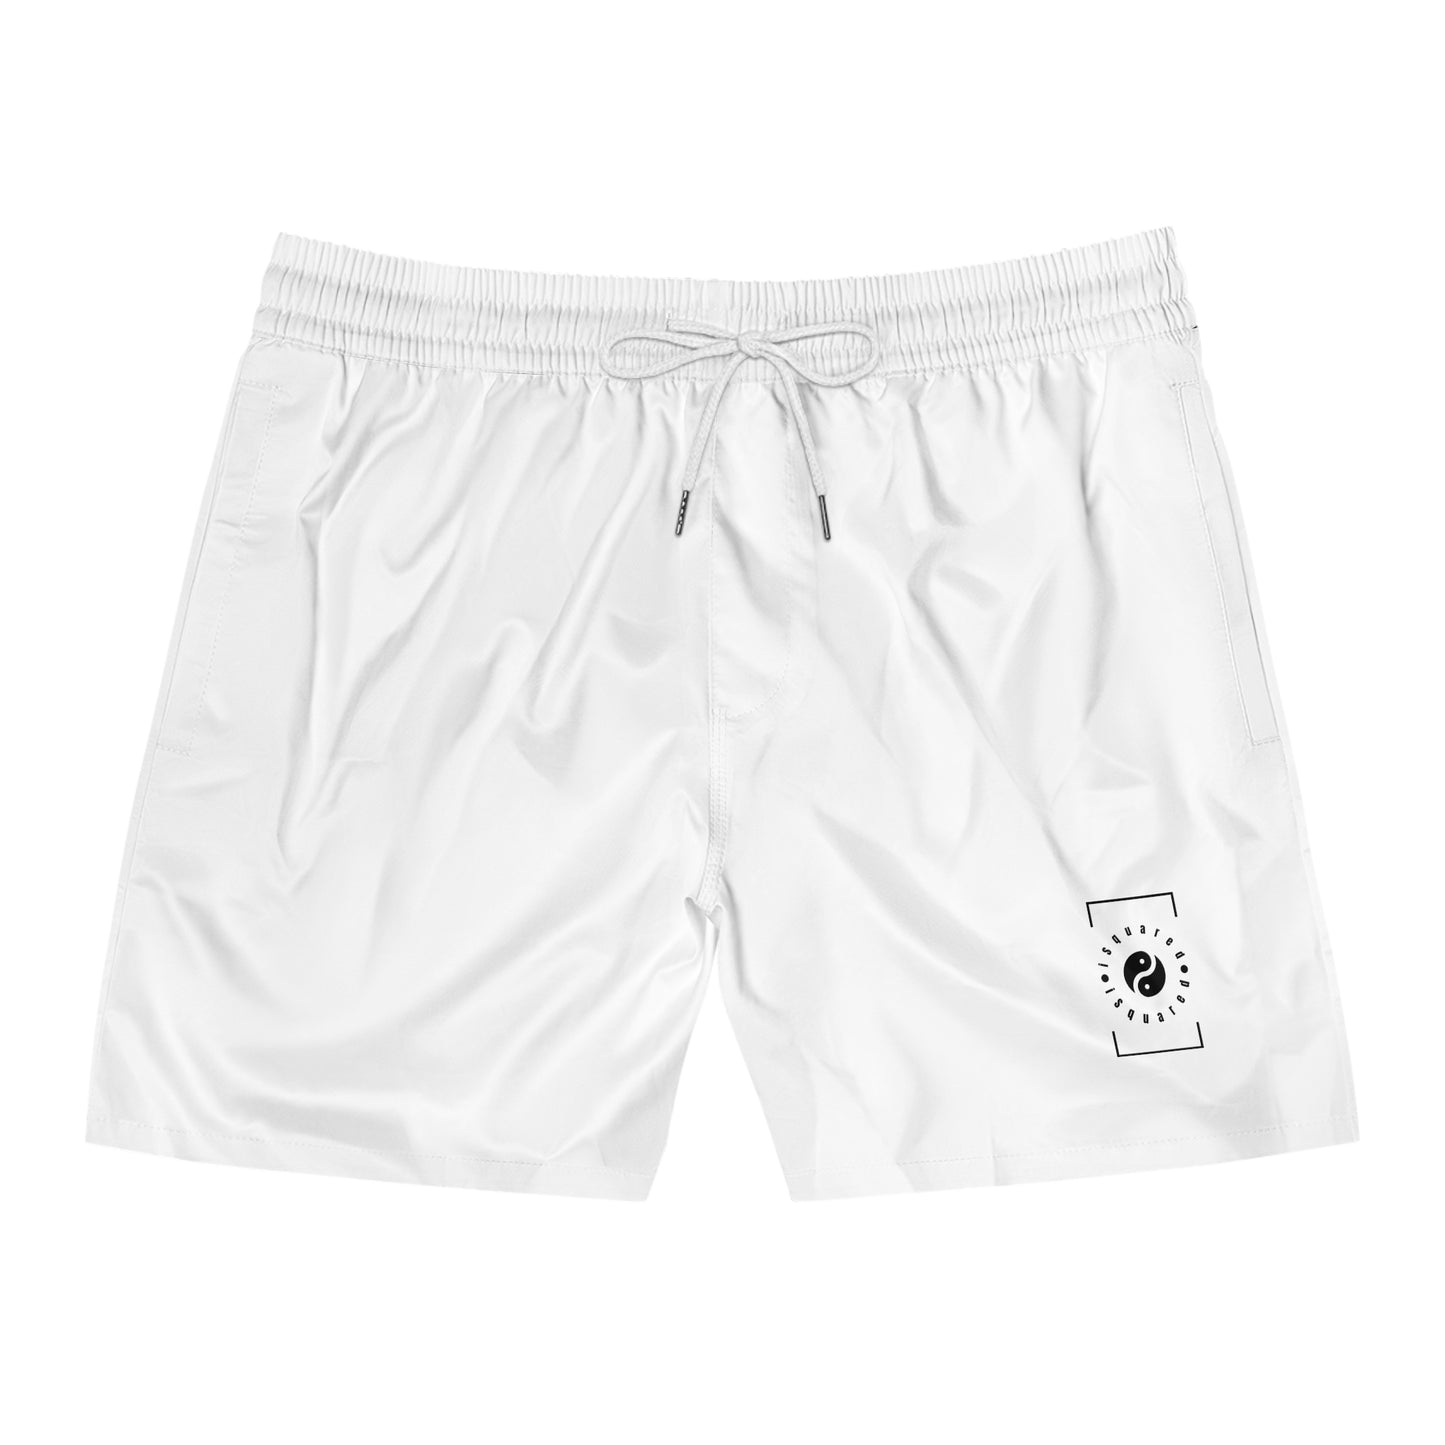 Angel White - Swim Shorts (Solid Color) for Men